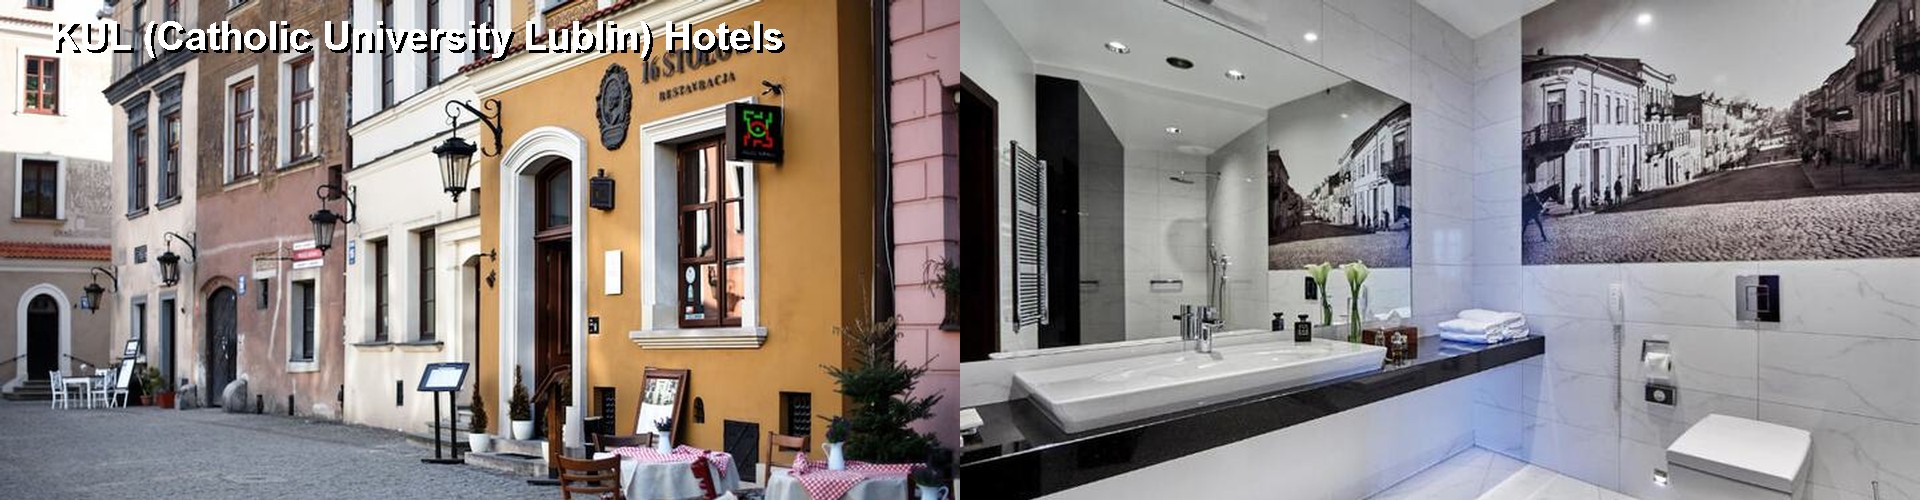 2 Best Hotels near KUL (Catholic University Lublin)